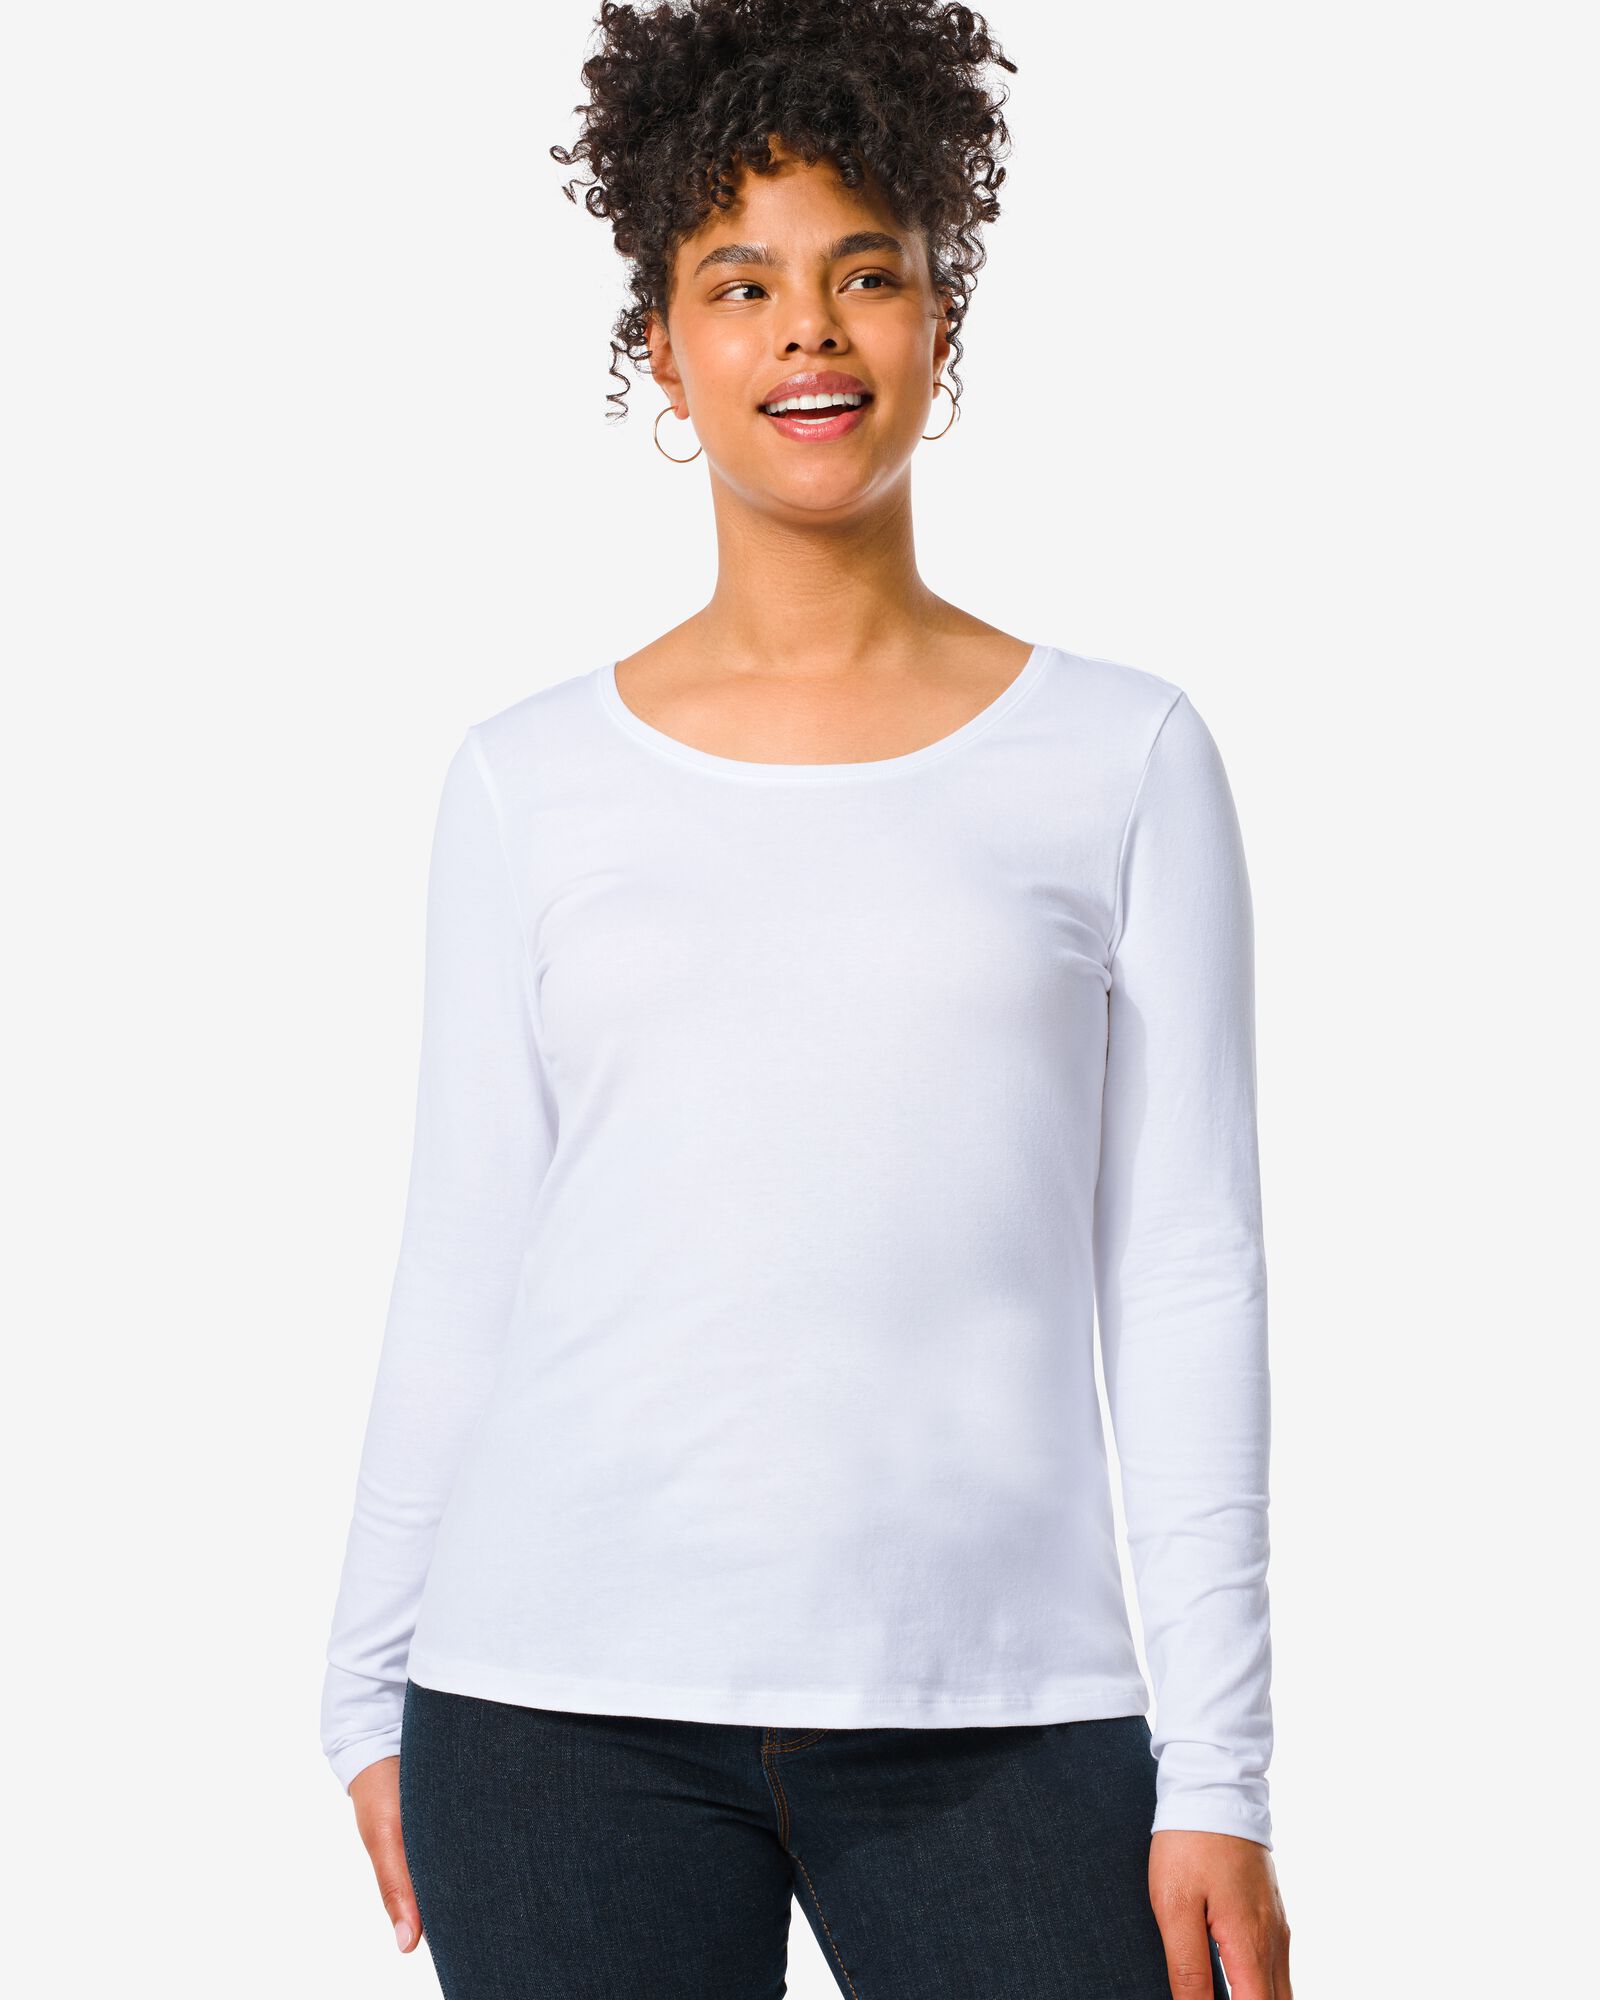 t-shirt femme classique blanc blanc - 1000005478 - HEMA